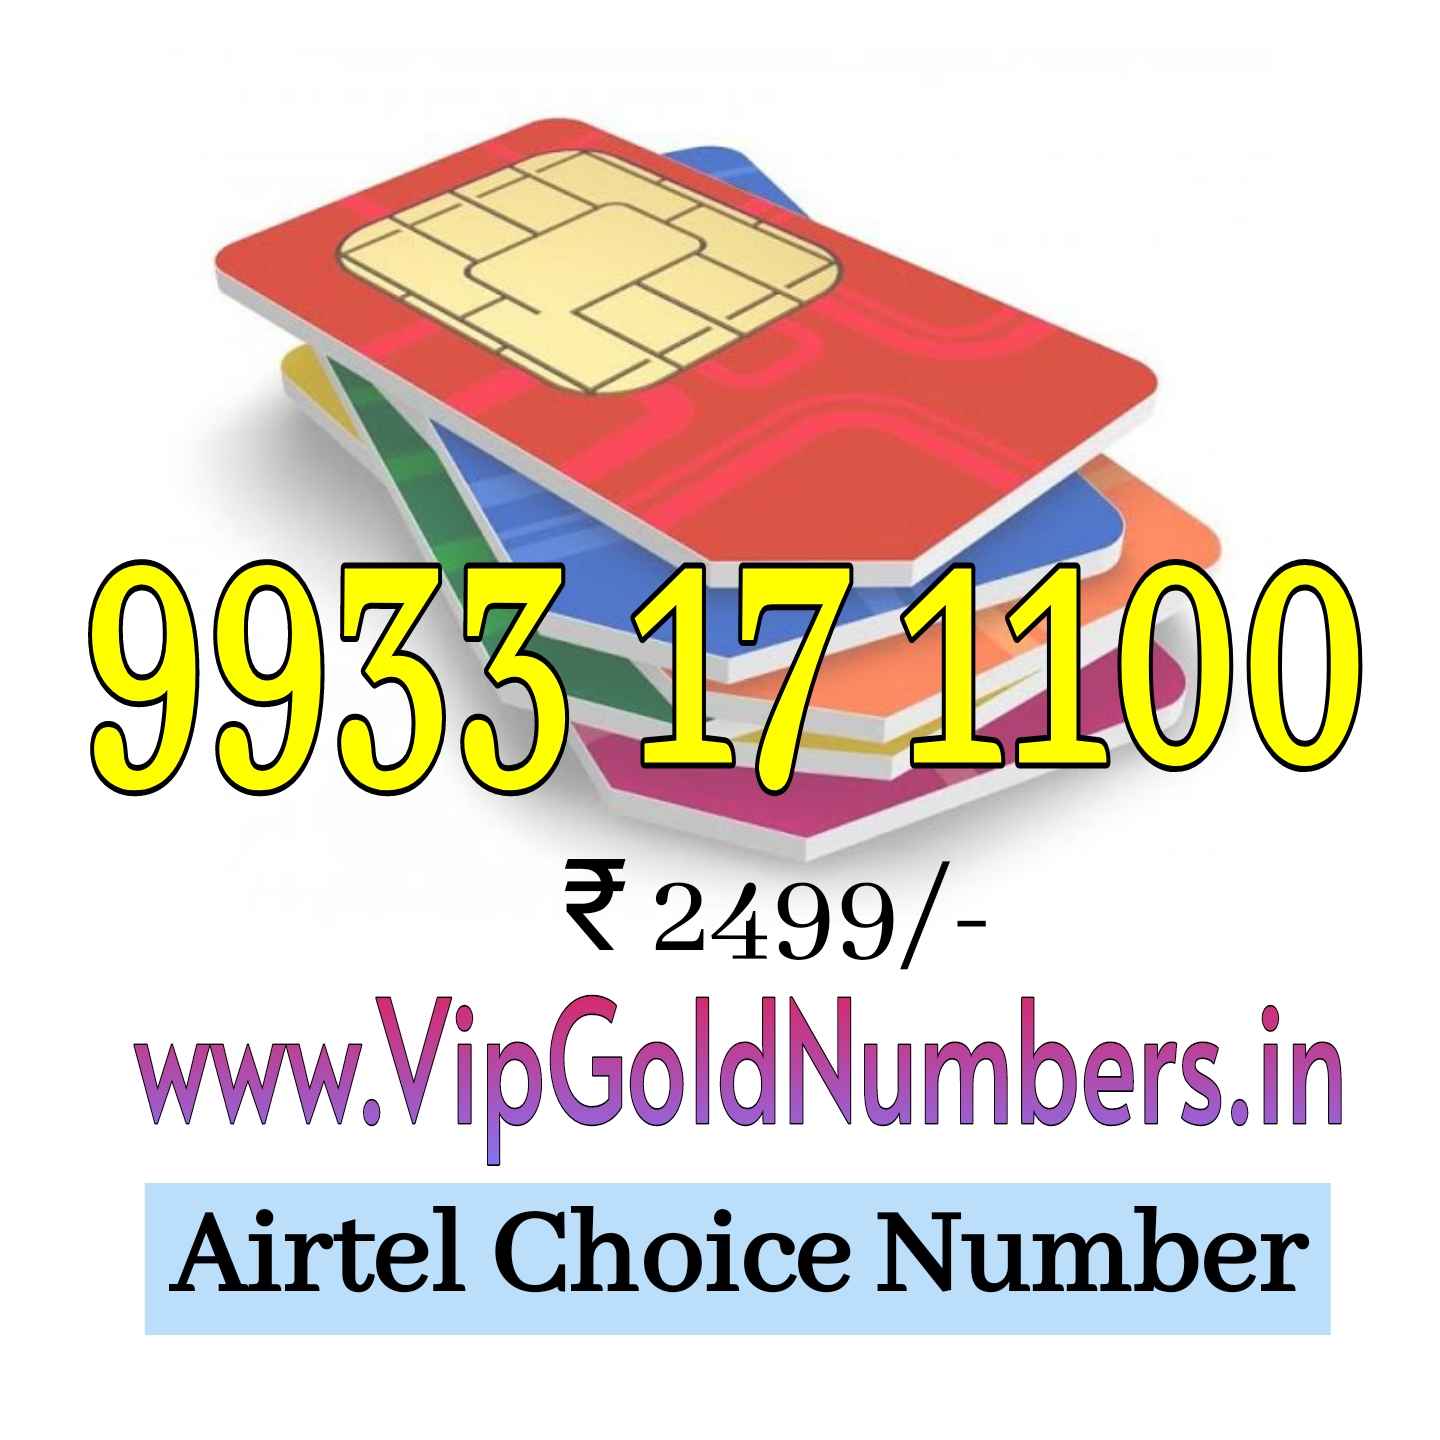 Airtel Choice Number